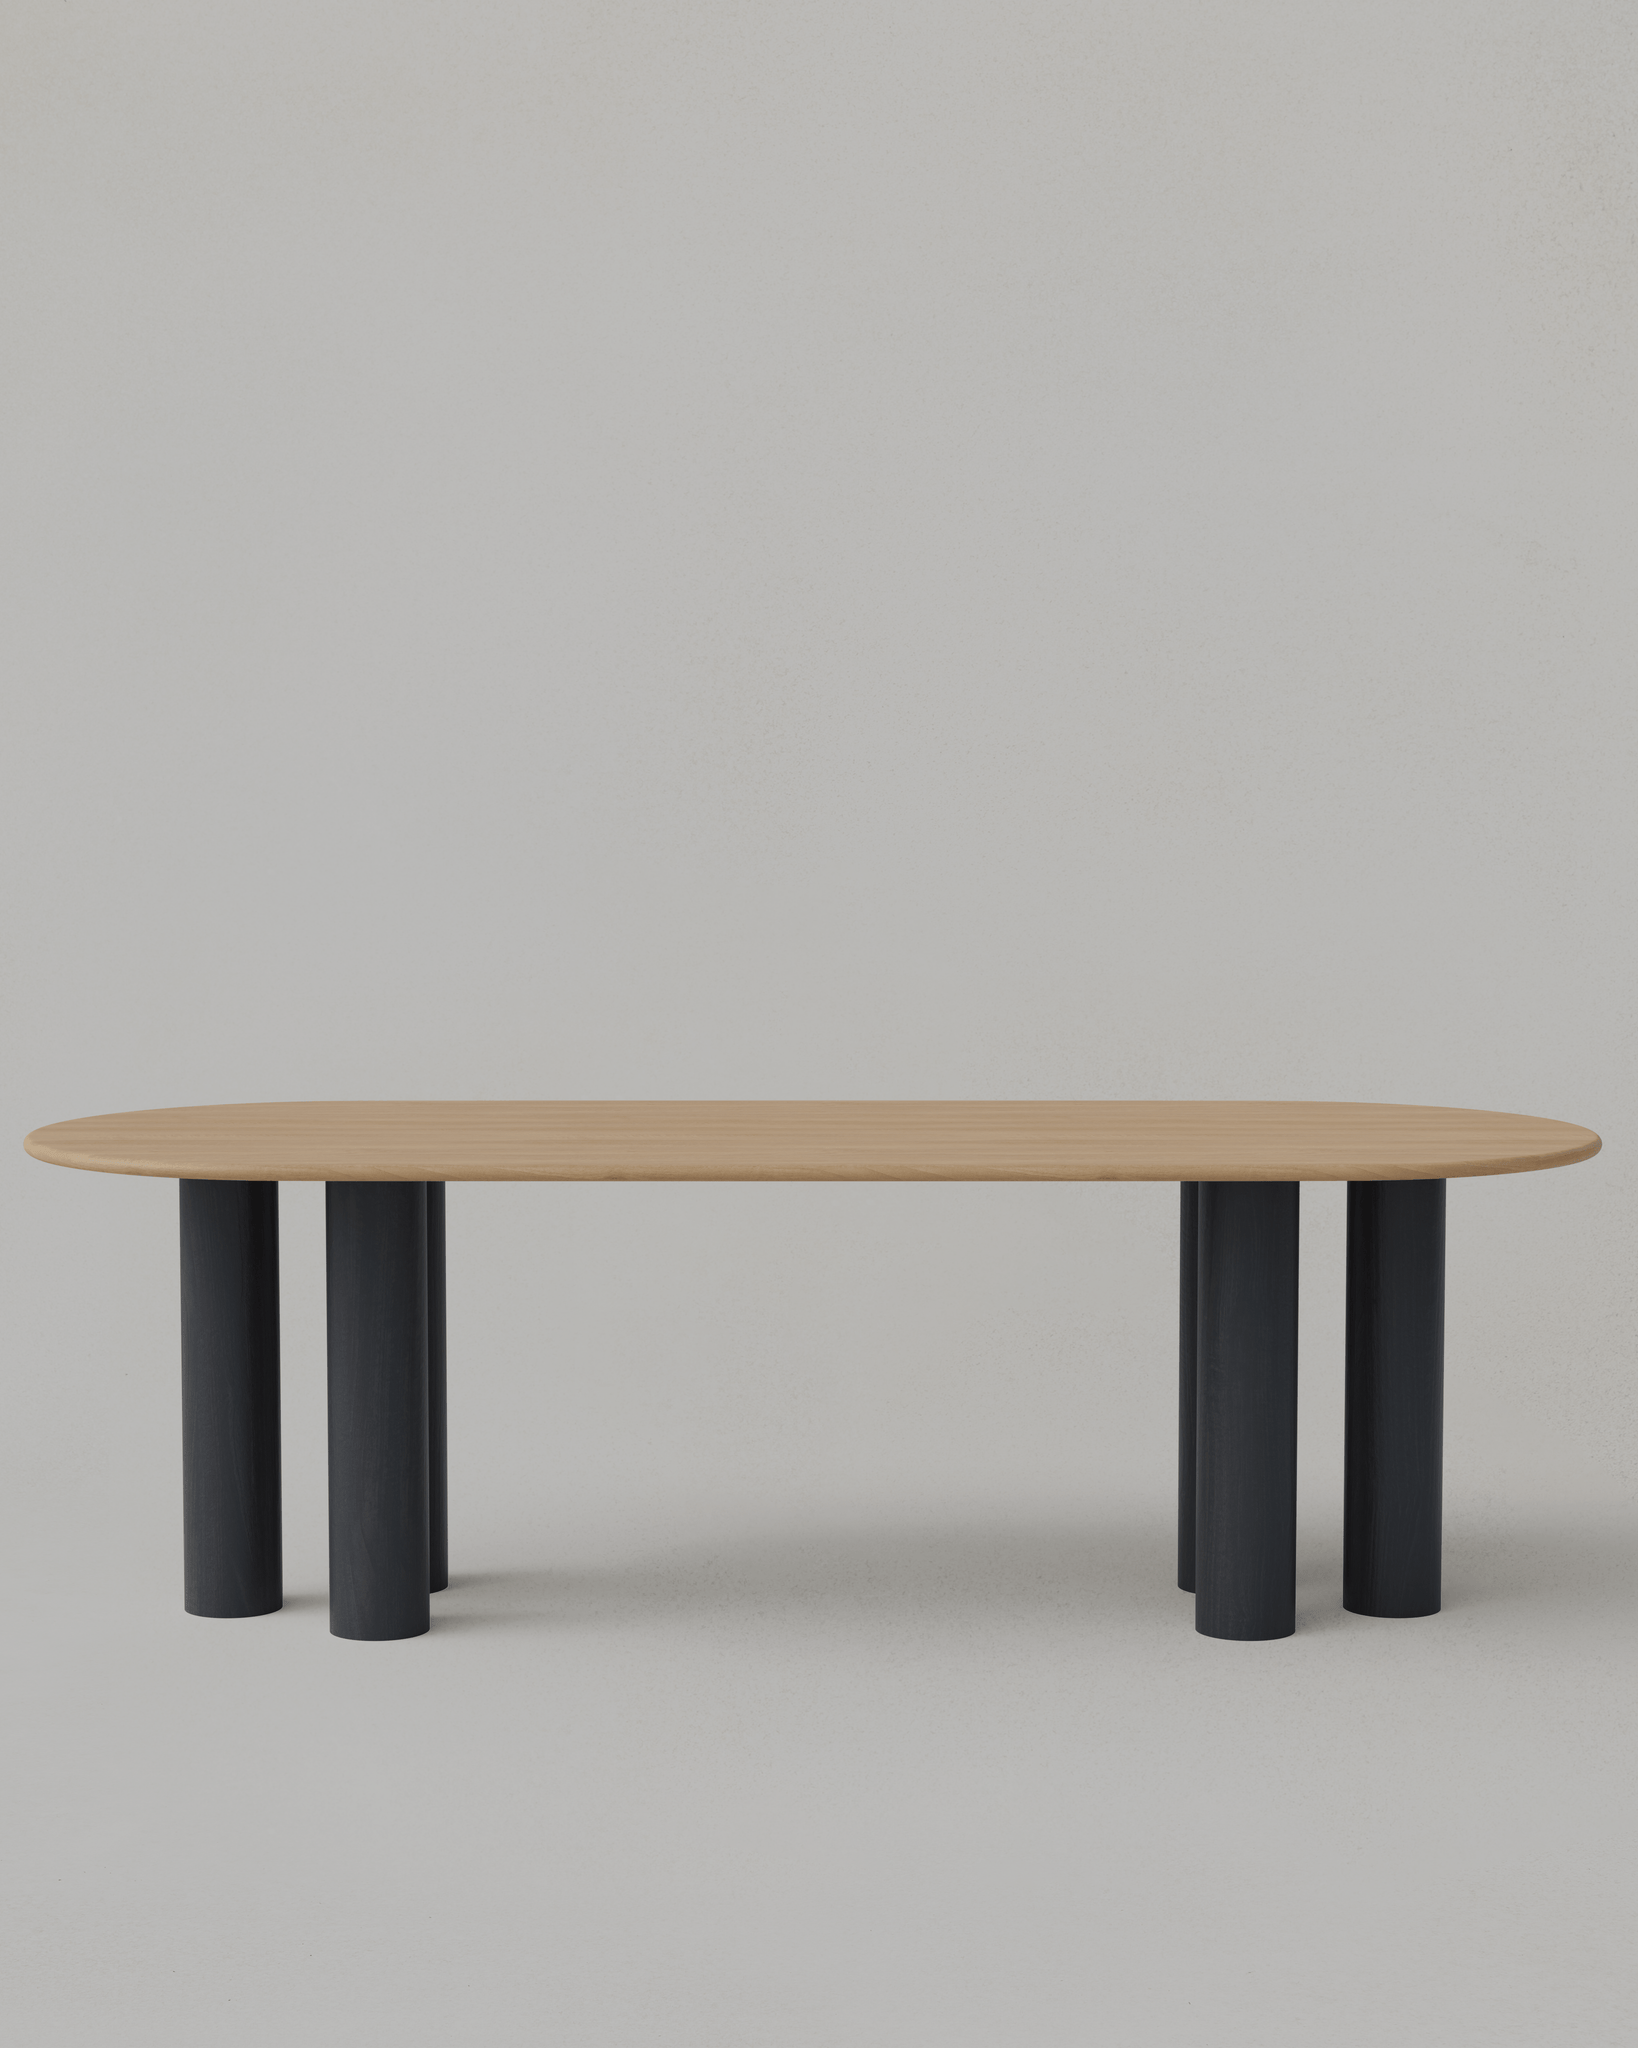 Six-Legged Oval Table